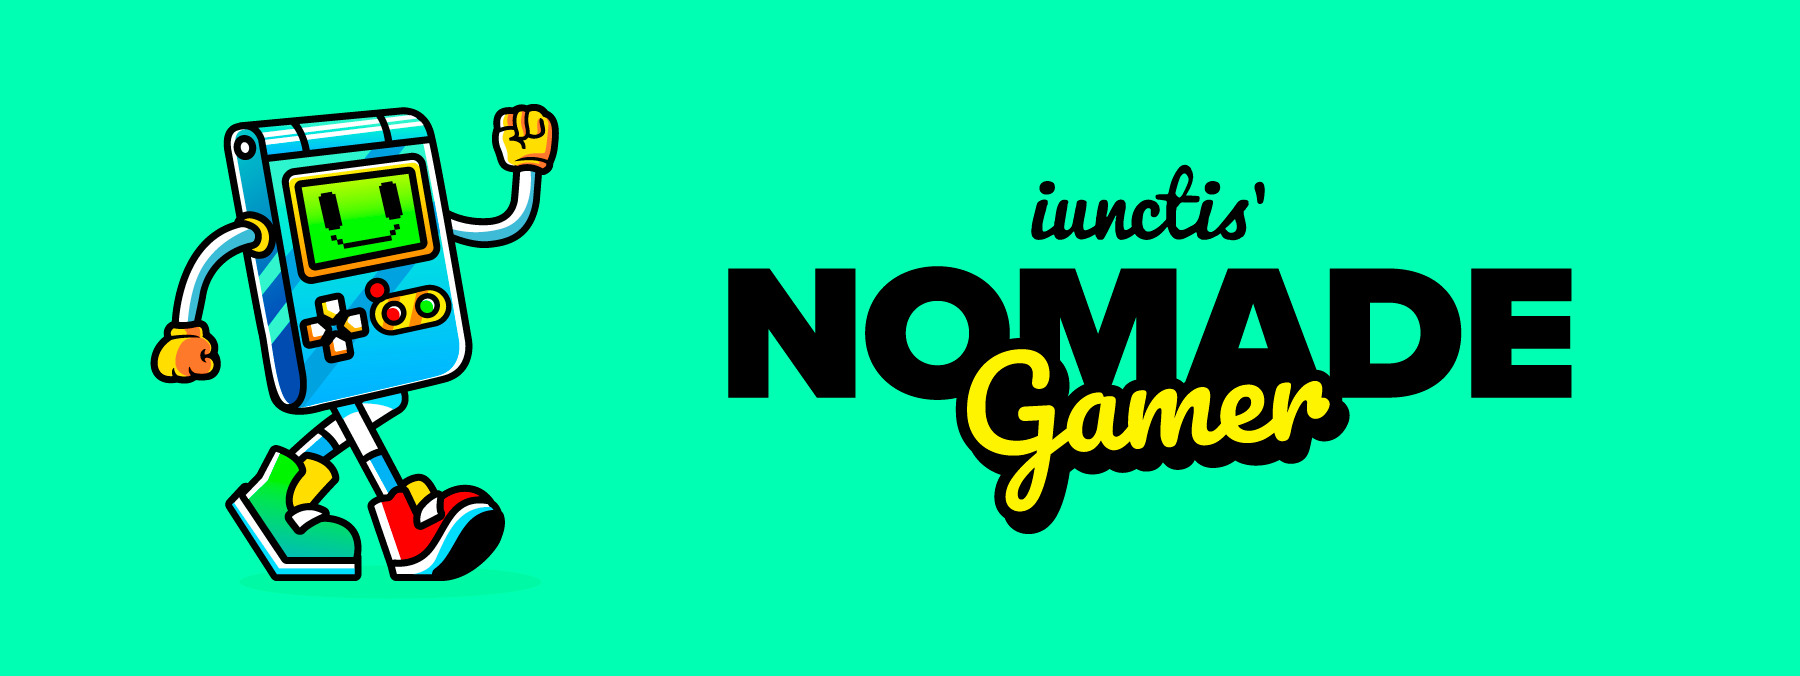 iunctis_nomade_gamer2